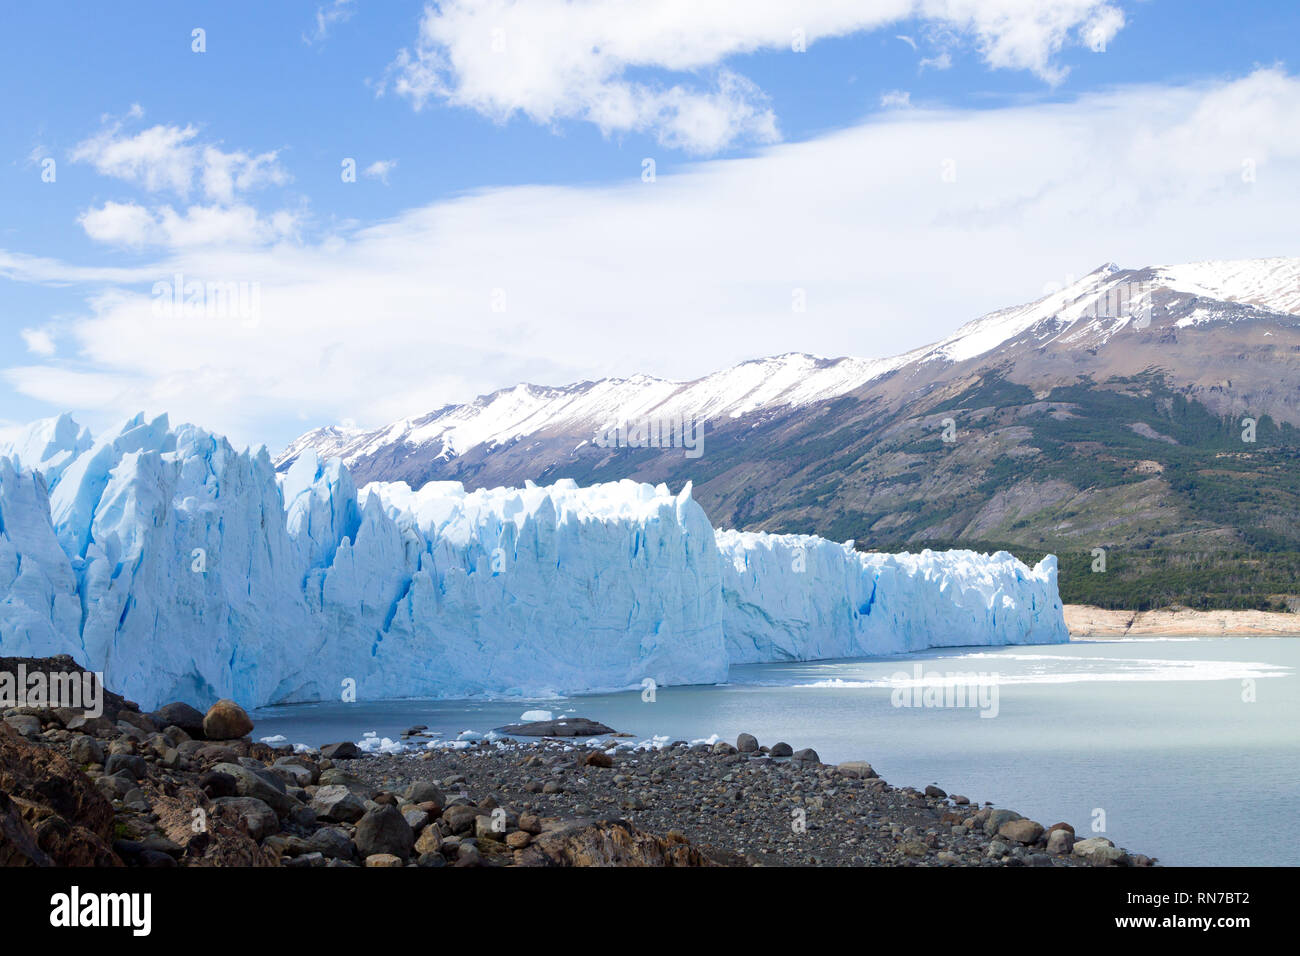 Perito Moreno glacier view, Patagonia landscape, Argentina. Patagonian scenery Stock Photo